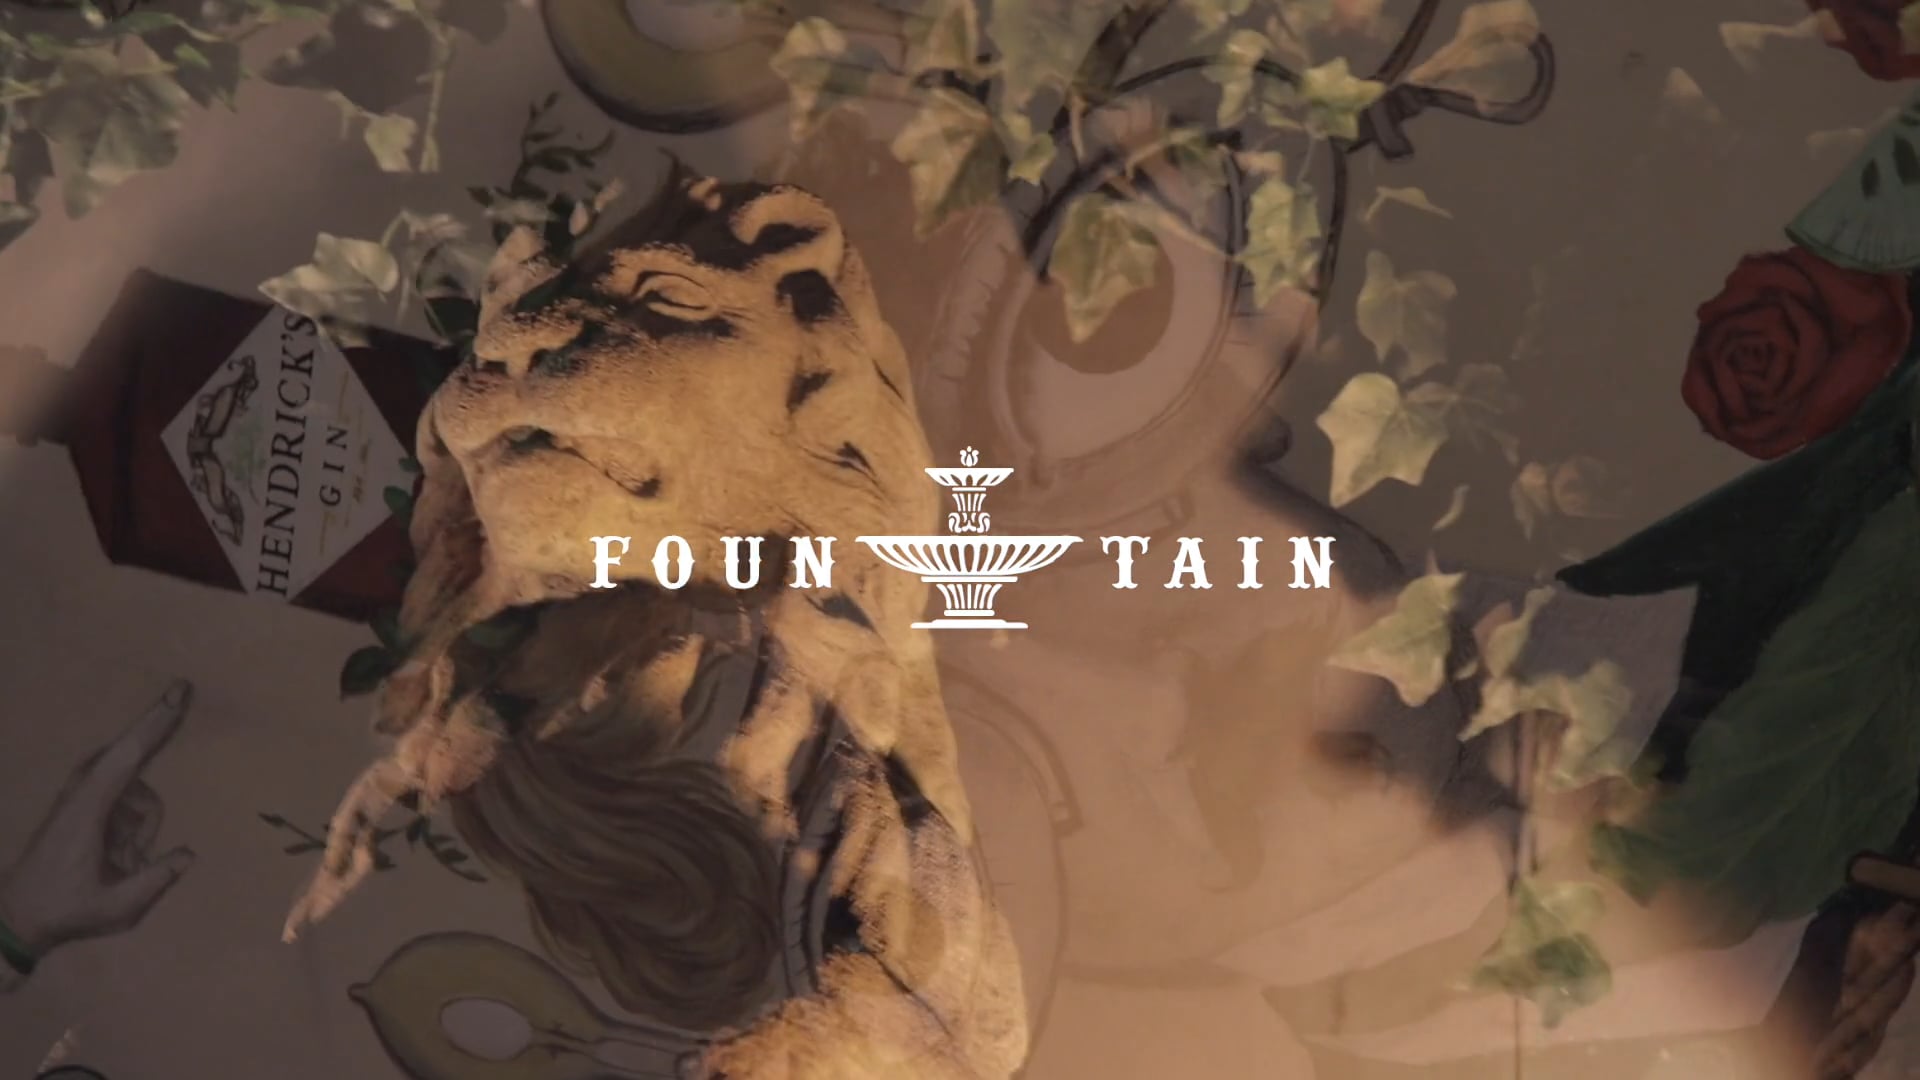 [Fountain] Itaewon Fountain Lounge [Trephic]